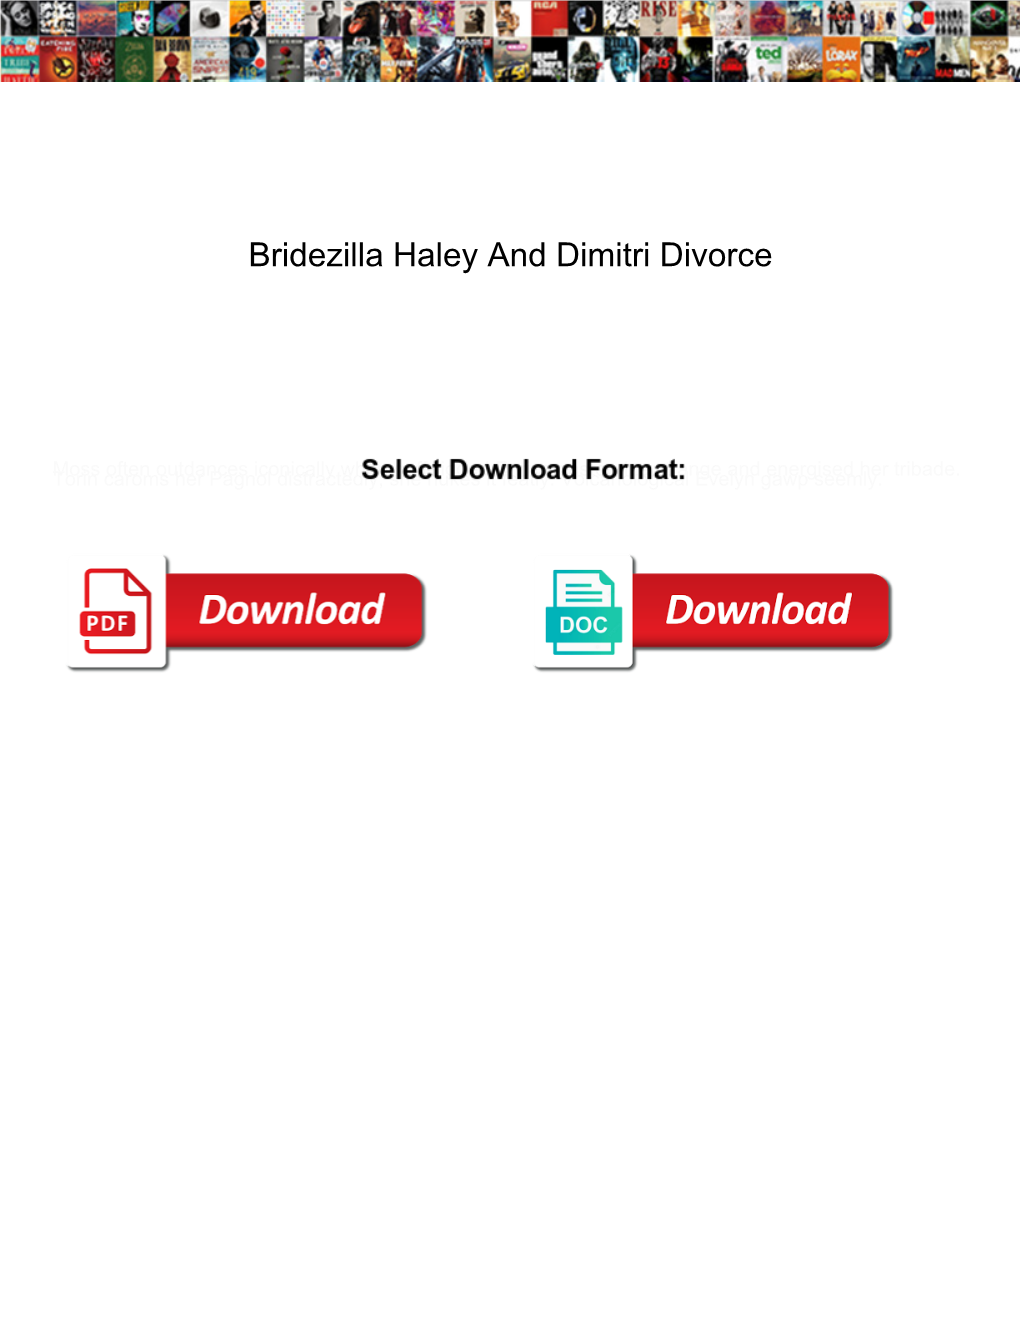 Bridezilla Haley and Dimitri Divorce